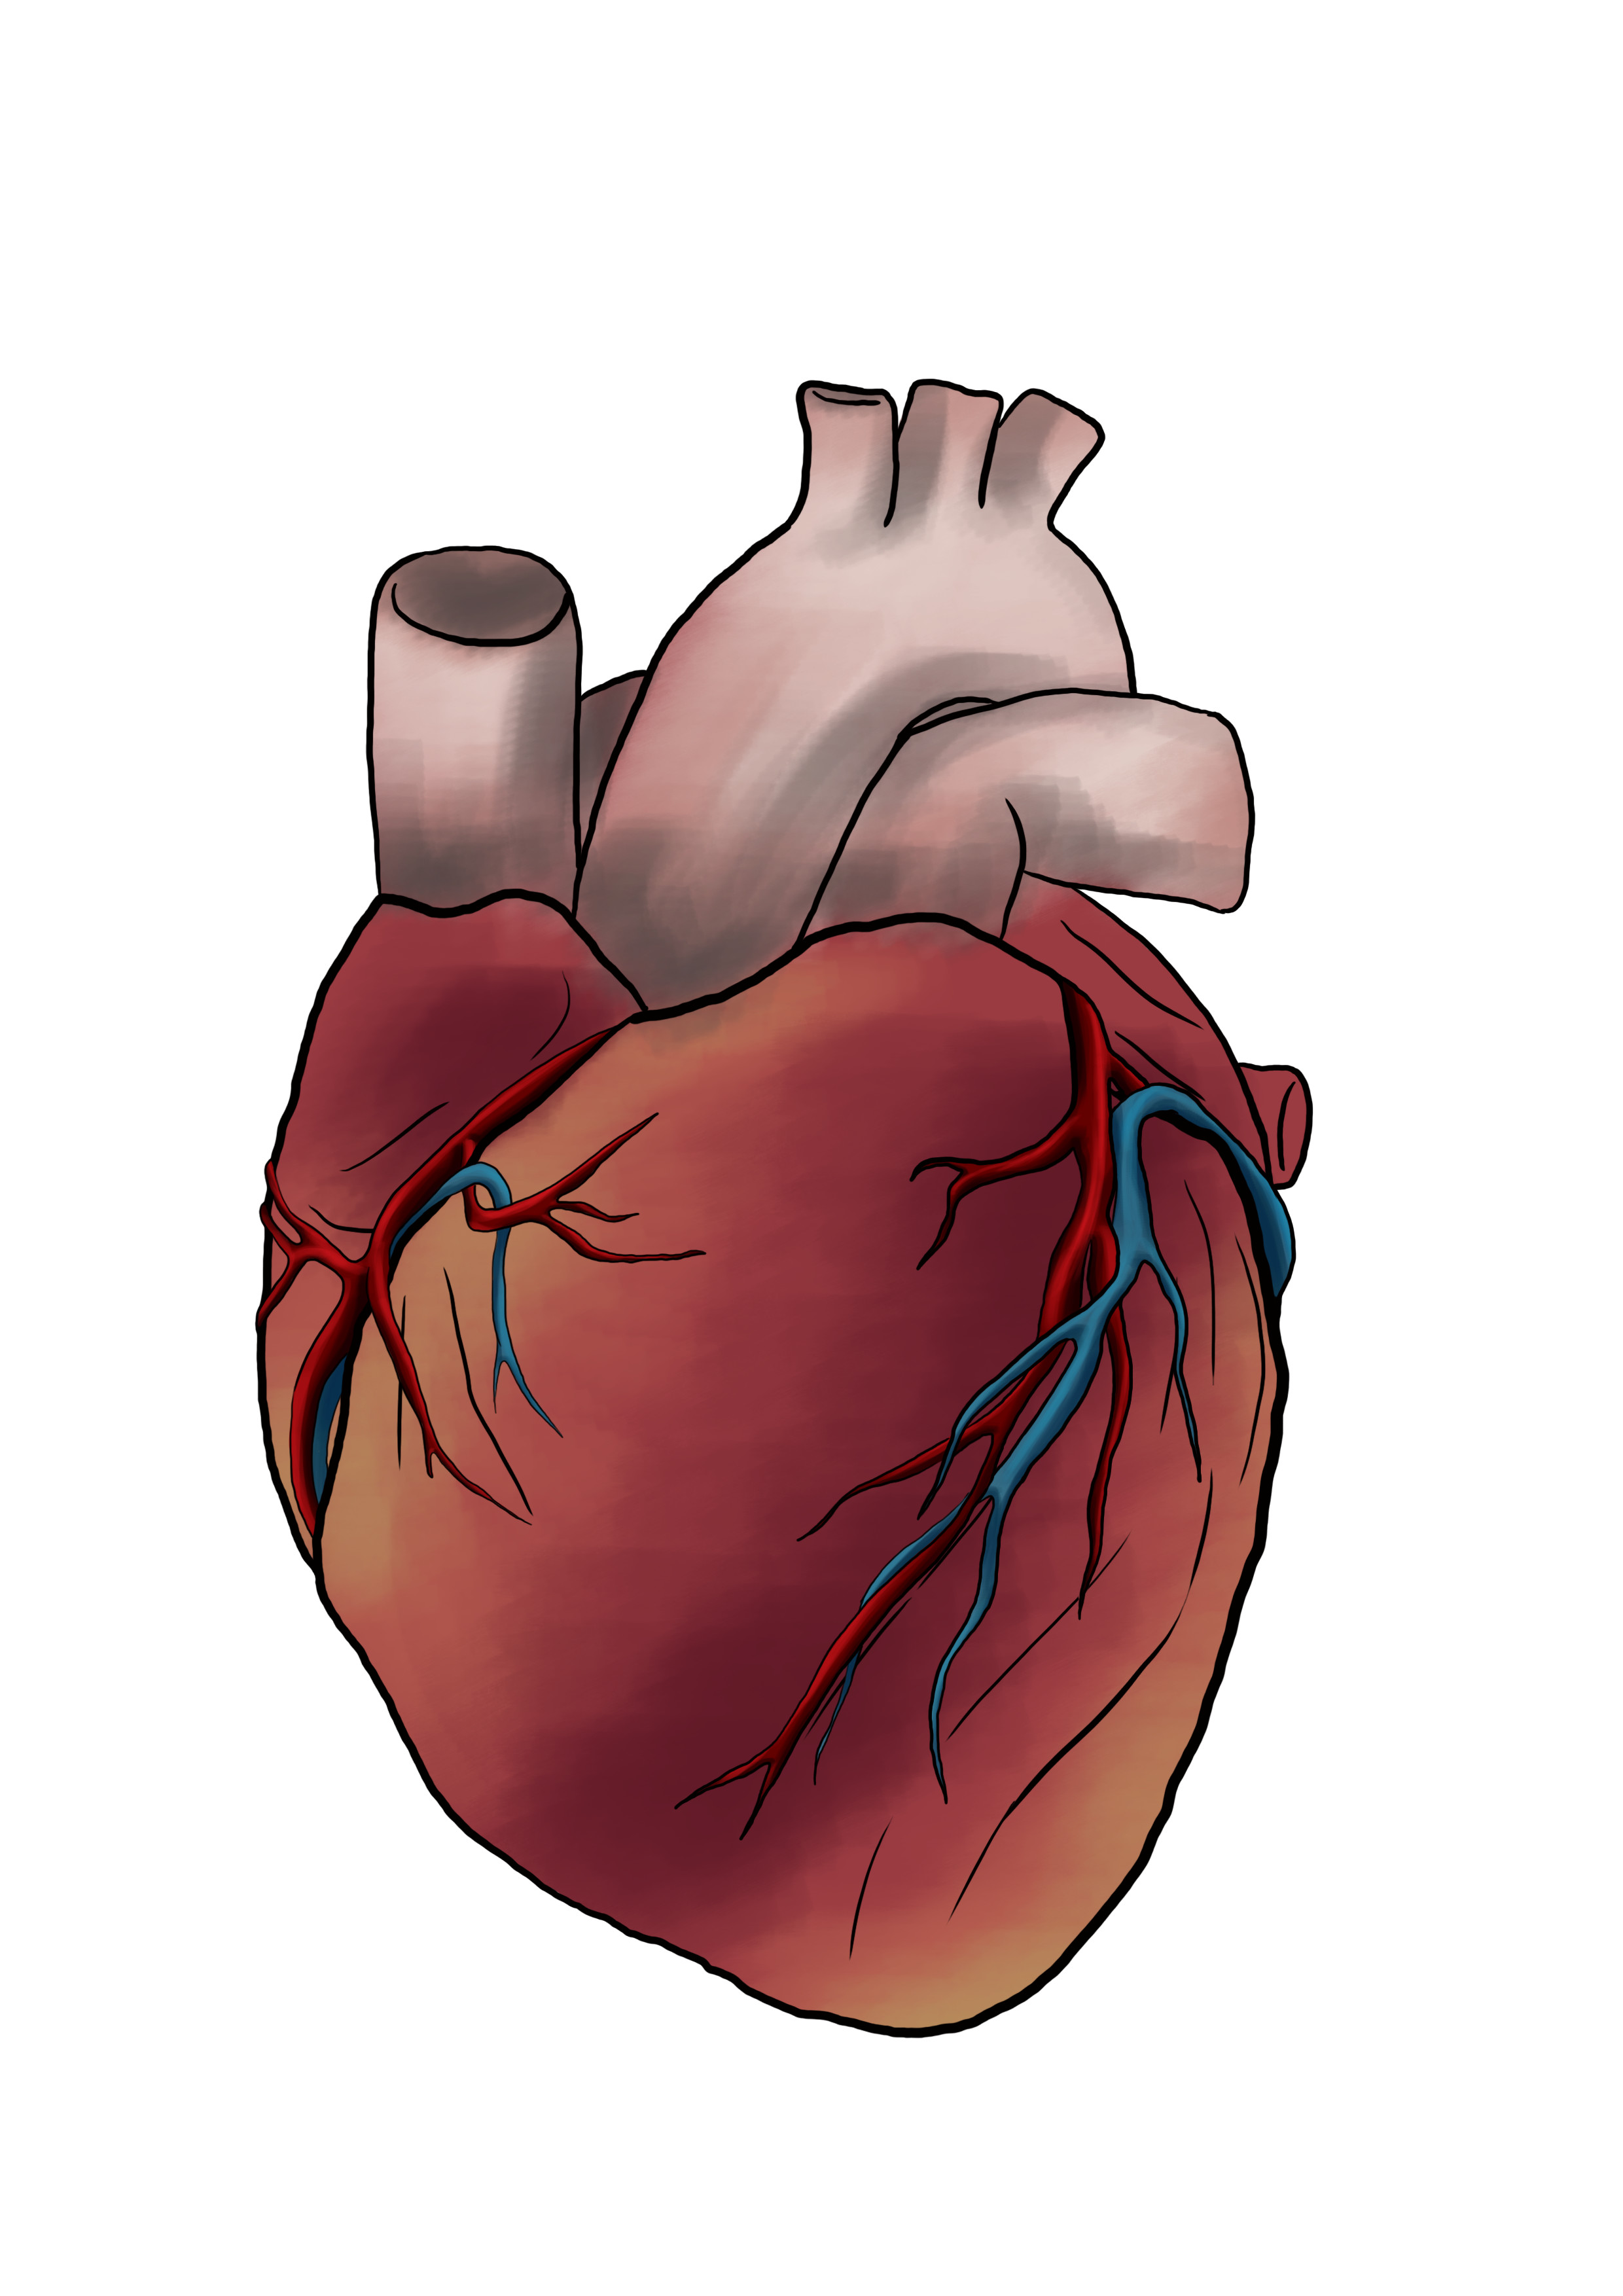 dessin de coeur humain en couleur